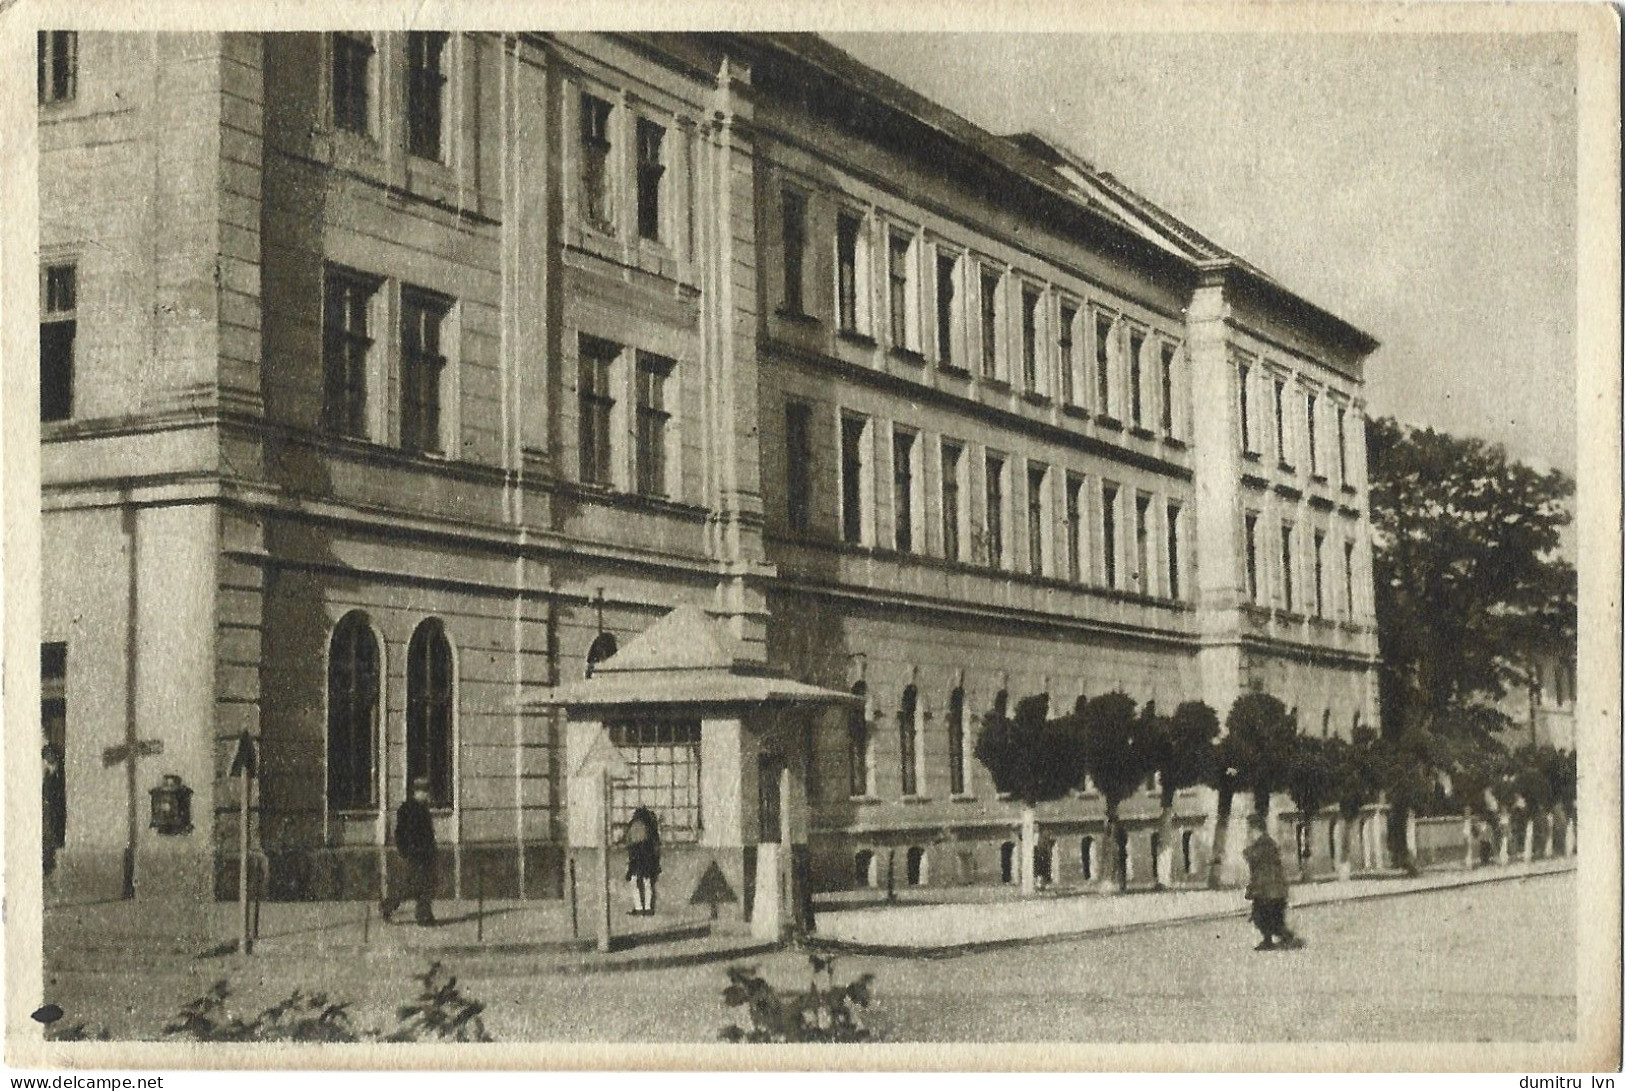 ROMANIA SFANTU GHEORGHE - THE HUNGARIAN HIGH SCHOOL BUILDING, ARCHITECTURE, PEOPLE POSTAGE DUE - Portomarken